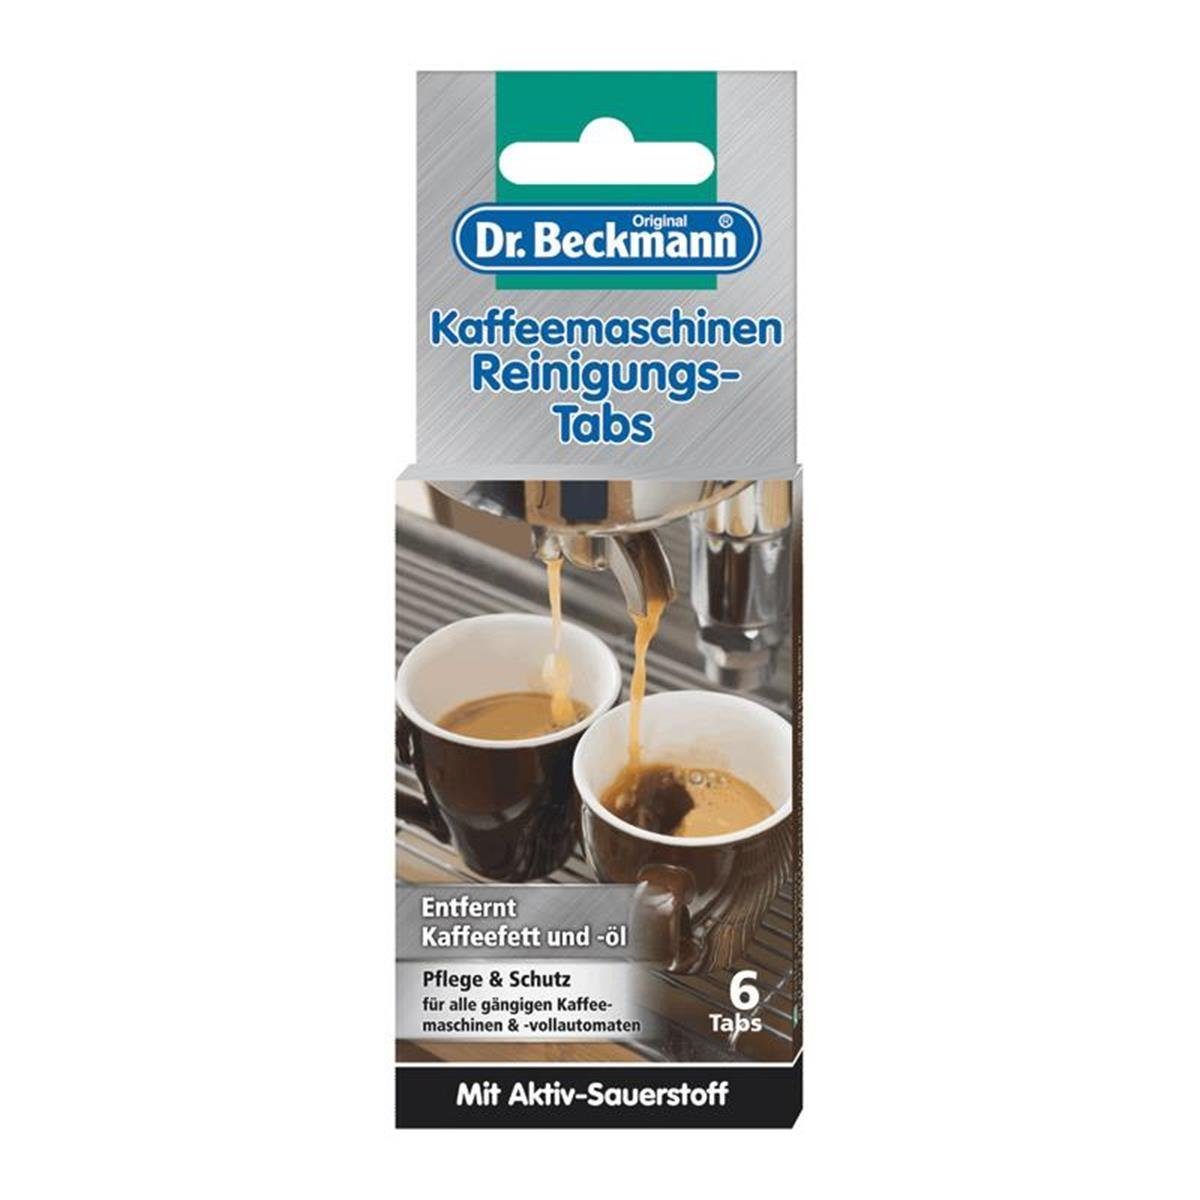 Dr. Beckmann - Reinigungs-Tabs Beckmann Dr. Entfernt Kaffeemaschinen Kaffeef 6 Reinigungstabletten Tabs